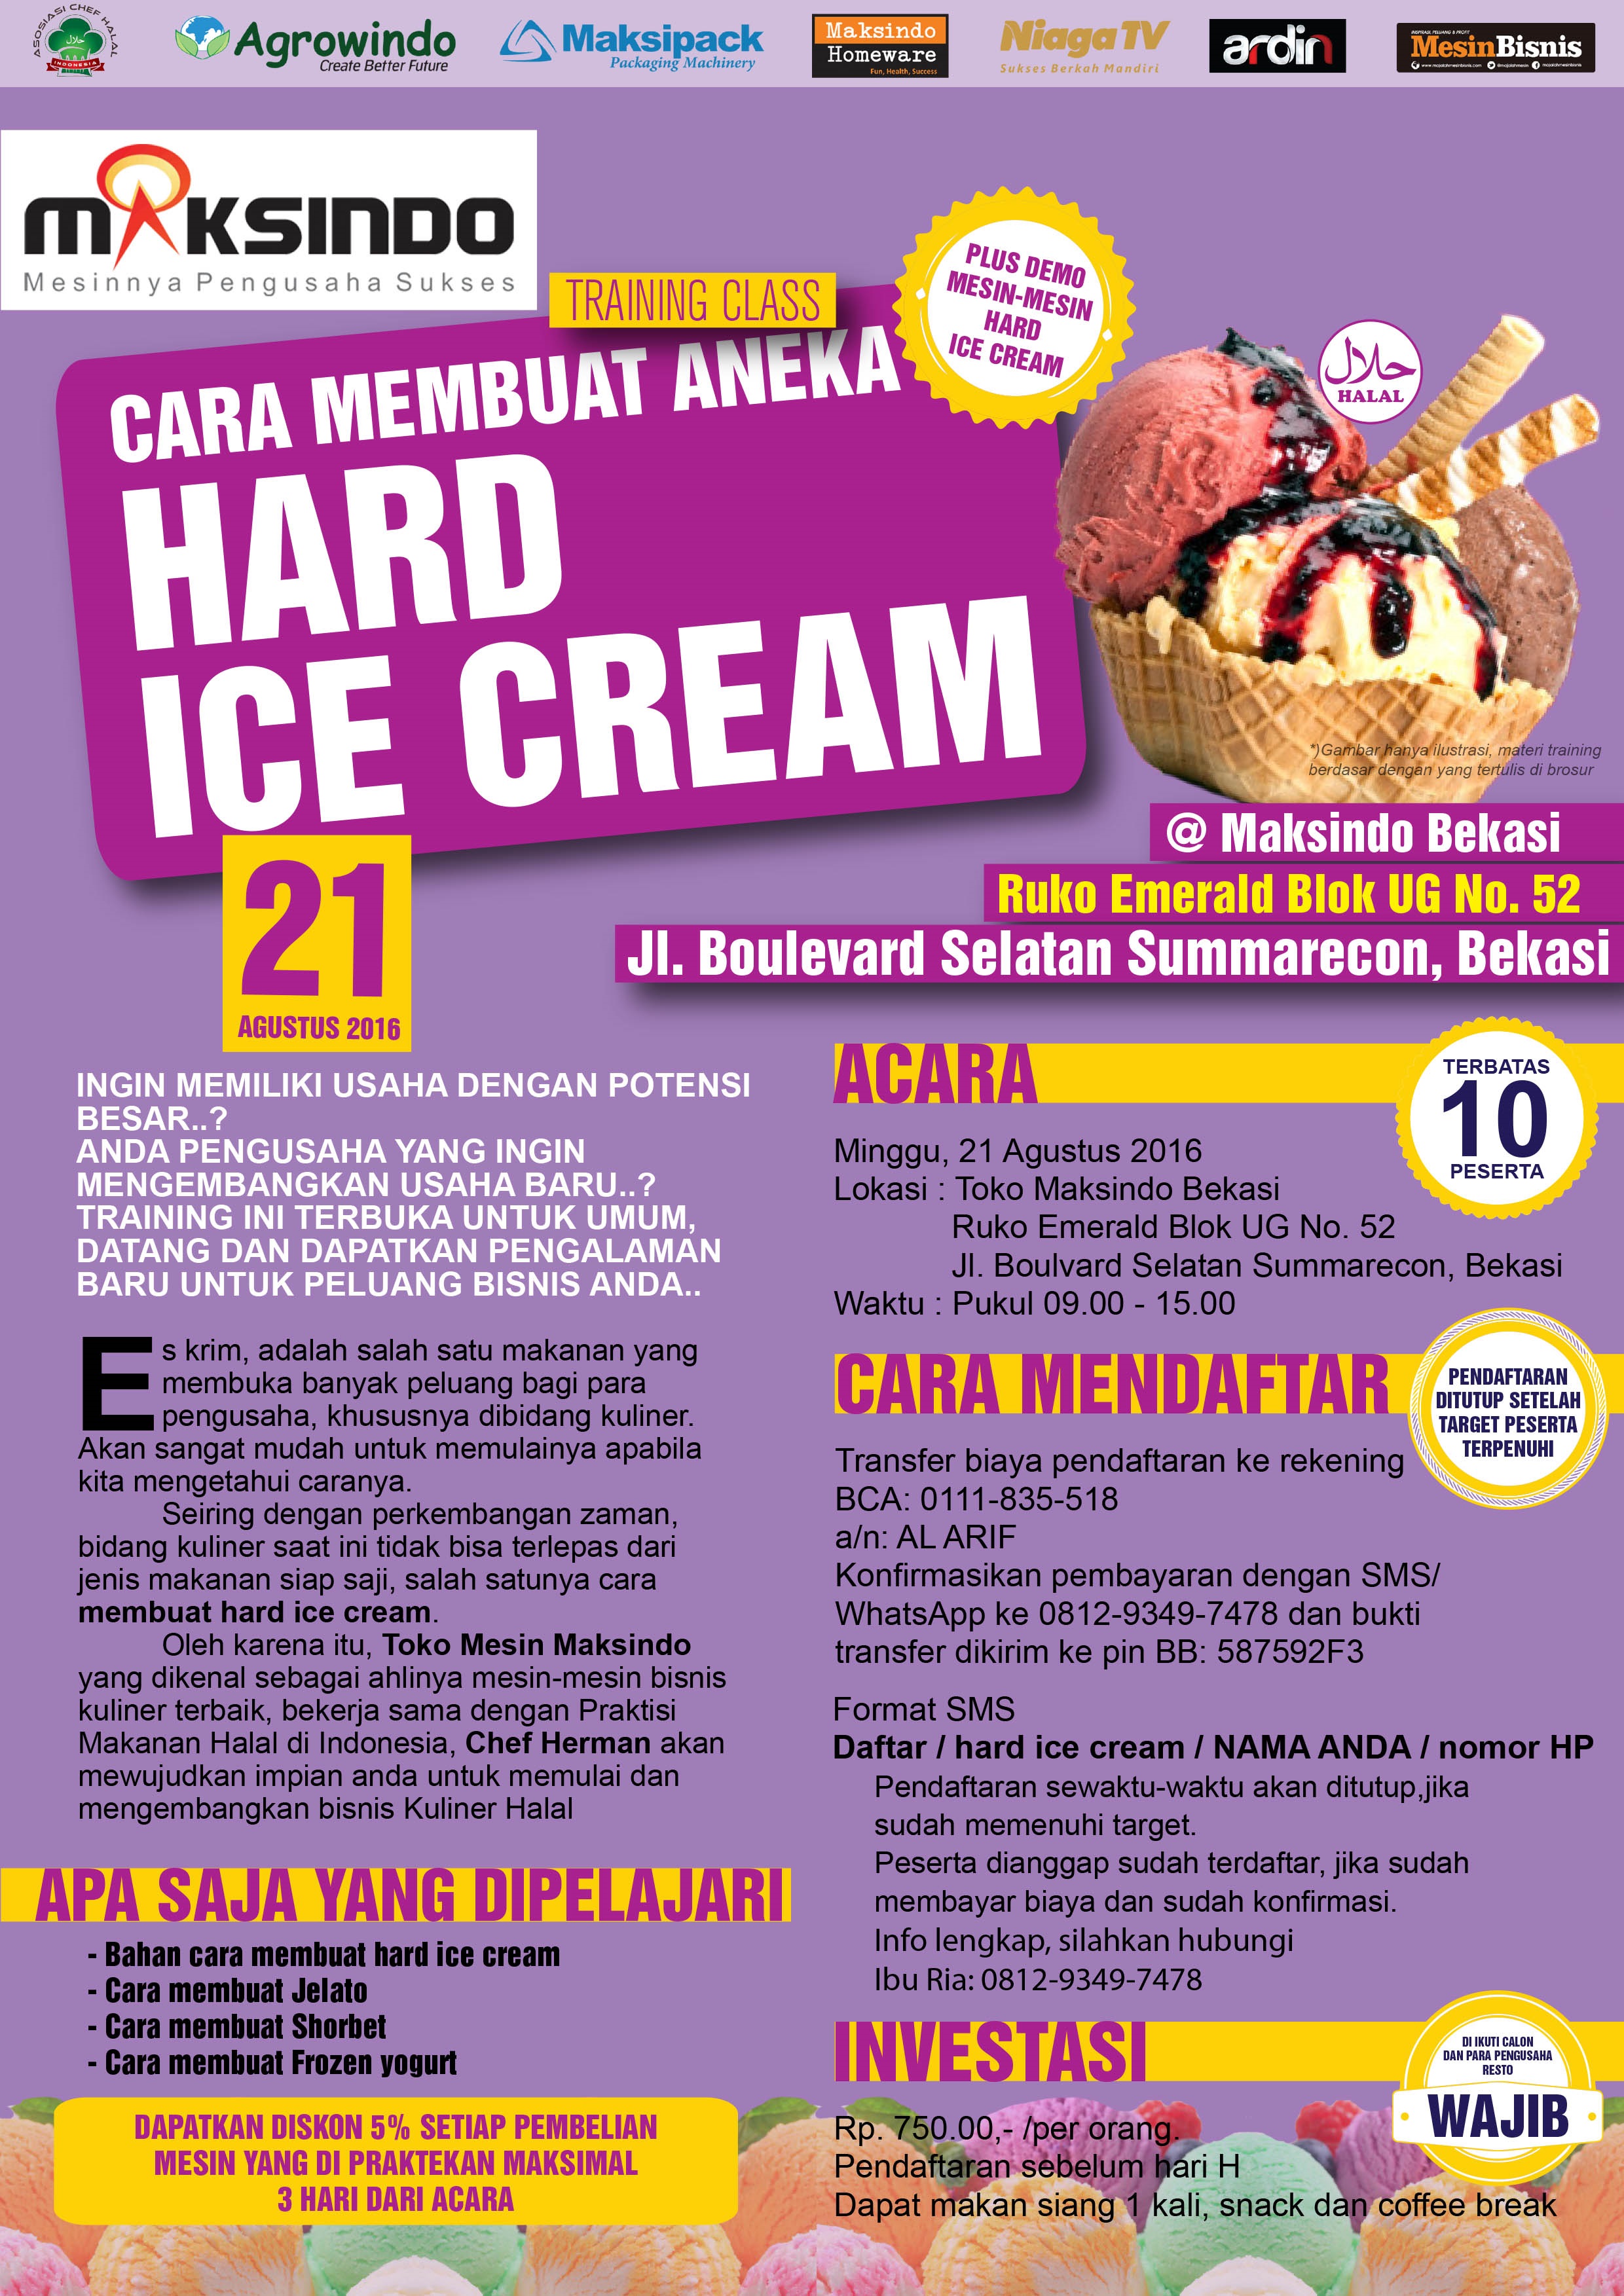 Training Usaha Hard Ice Cream di Bekasi, 21 Agustus 2016